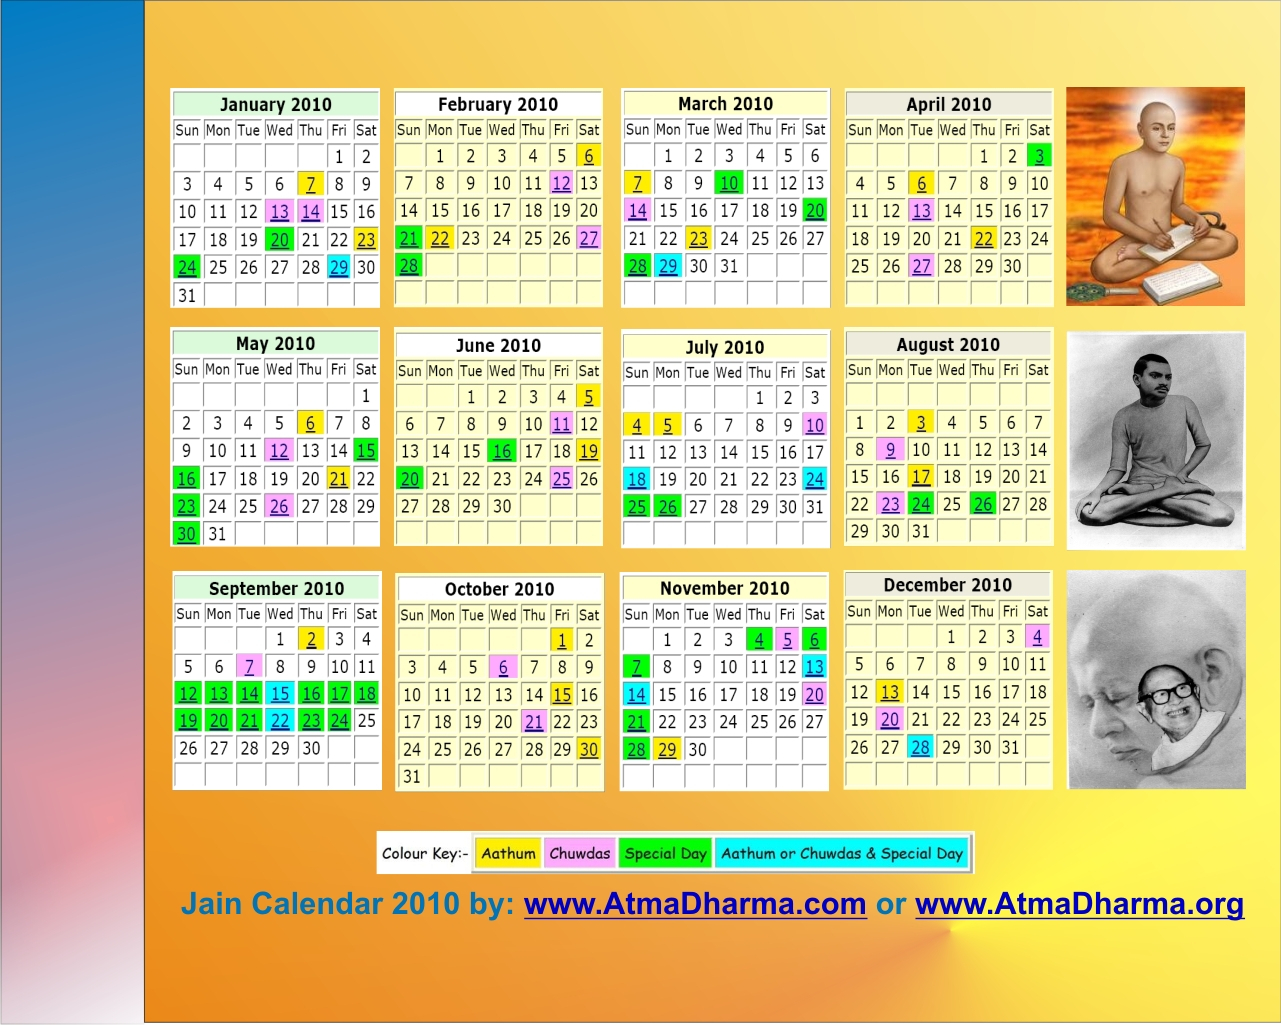 Jain Calendar